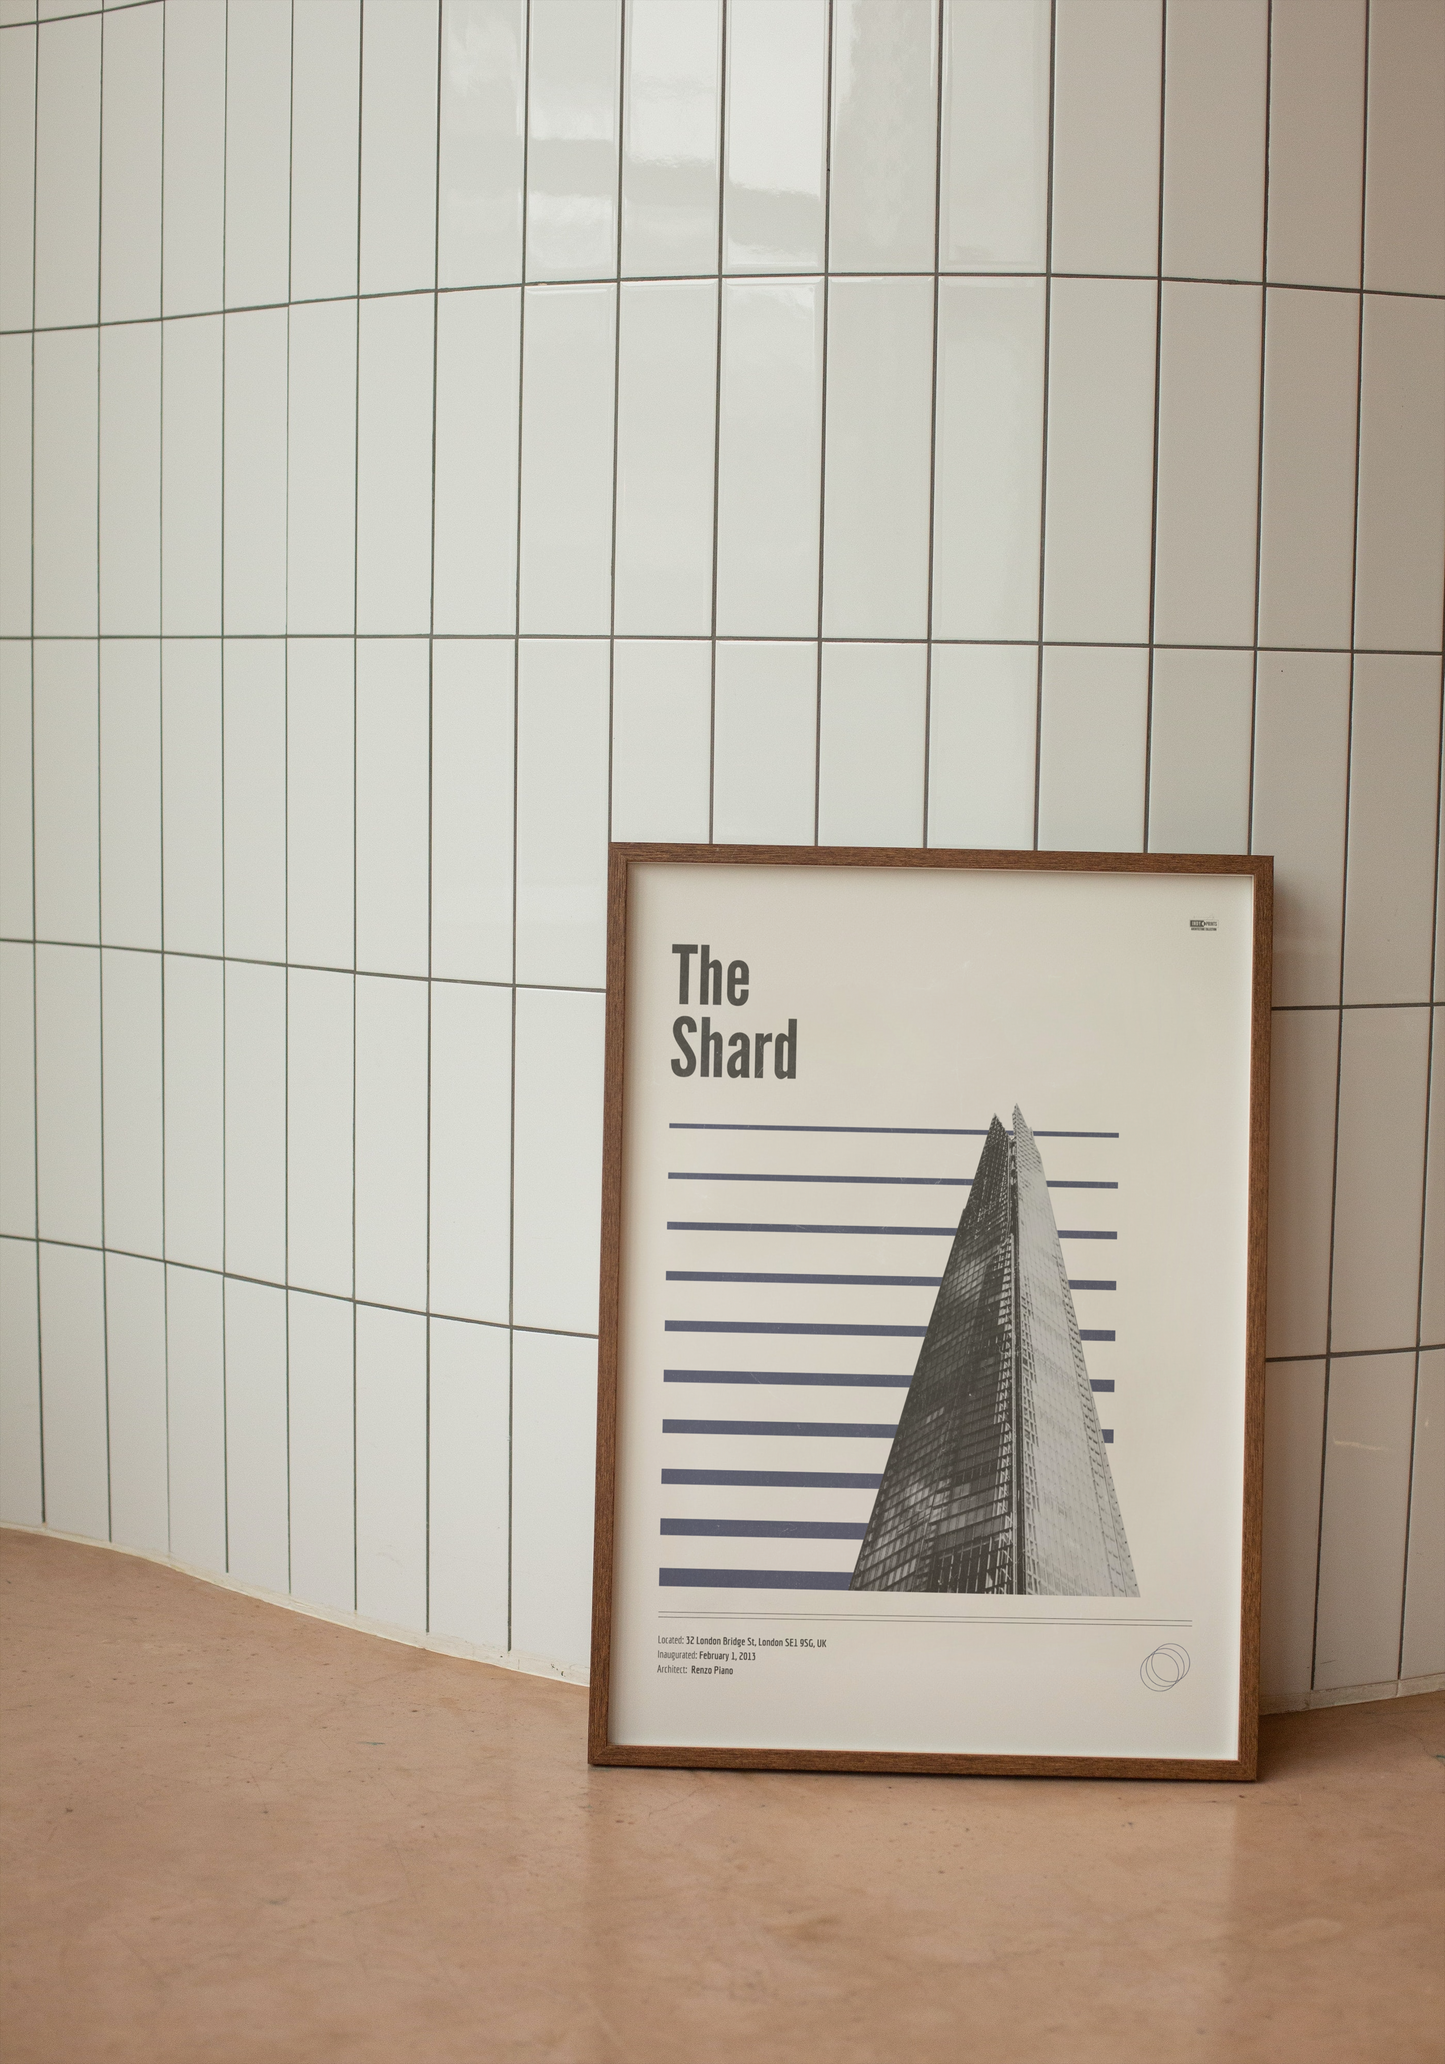 The Shard Minimalist Architecture Poster